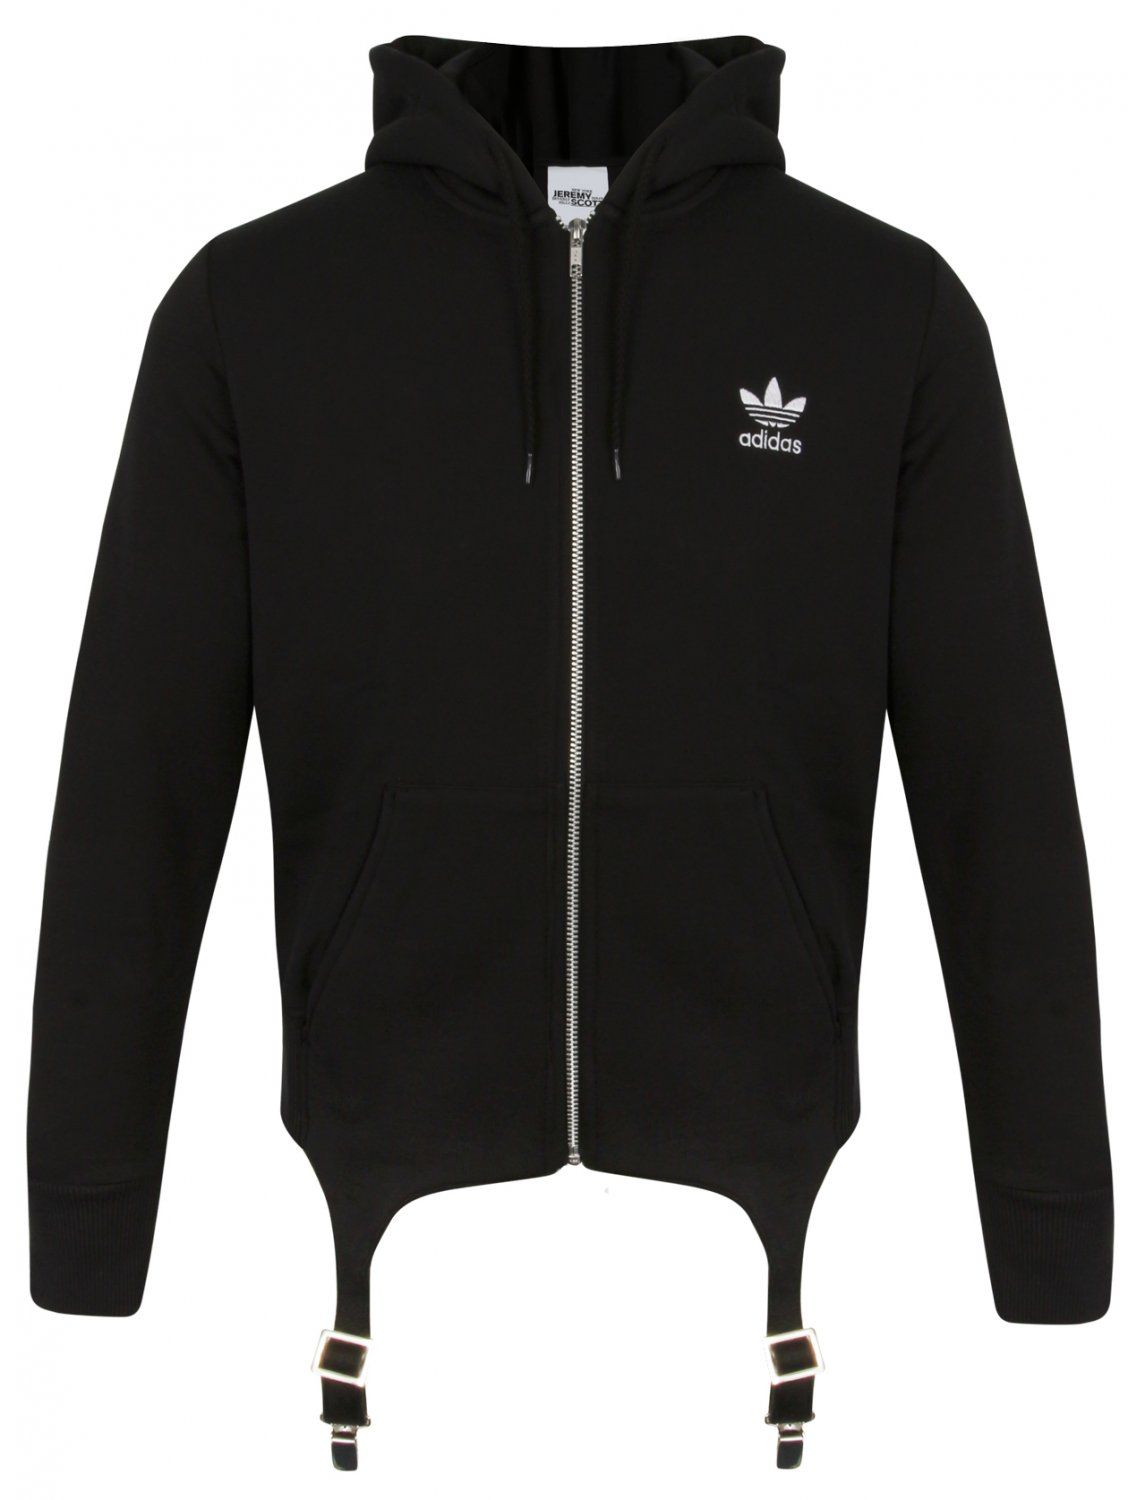 Jeremy Scott Sweater Adidas Reduced Prices, 45% OFF | maikyaulaw.com